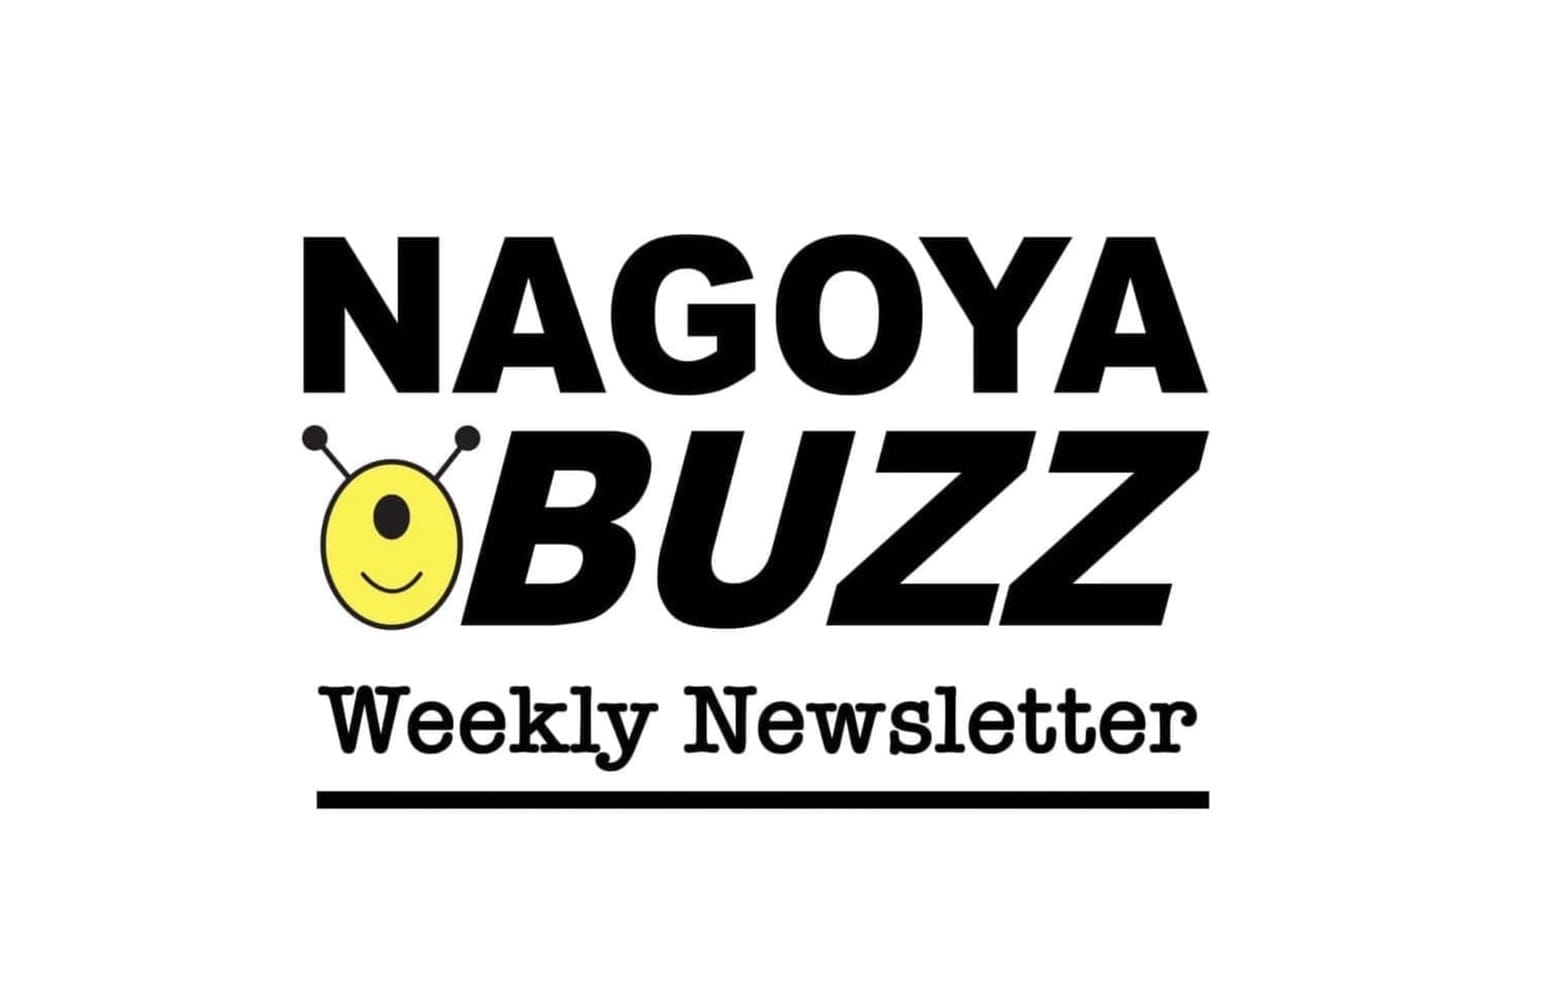 The NAGOYA BUZZ April 17